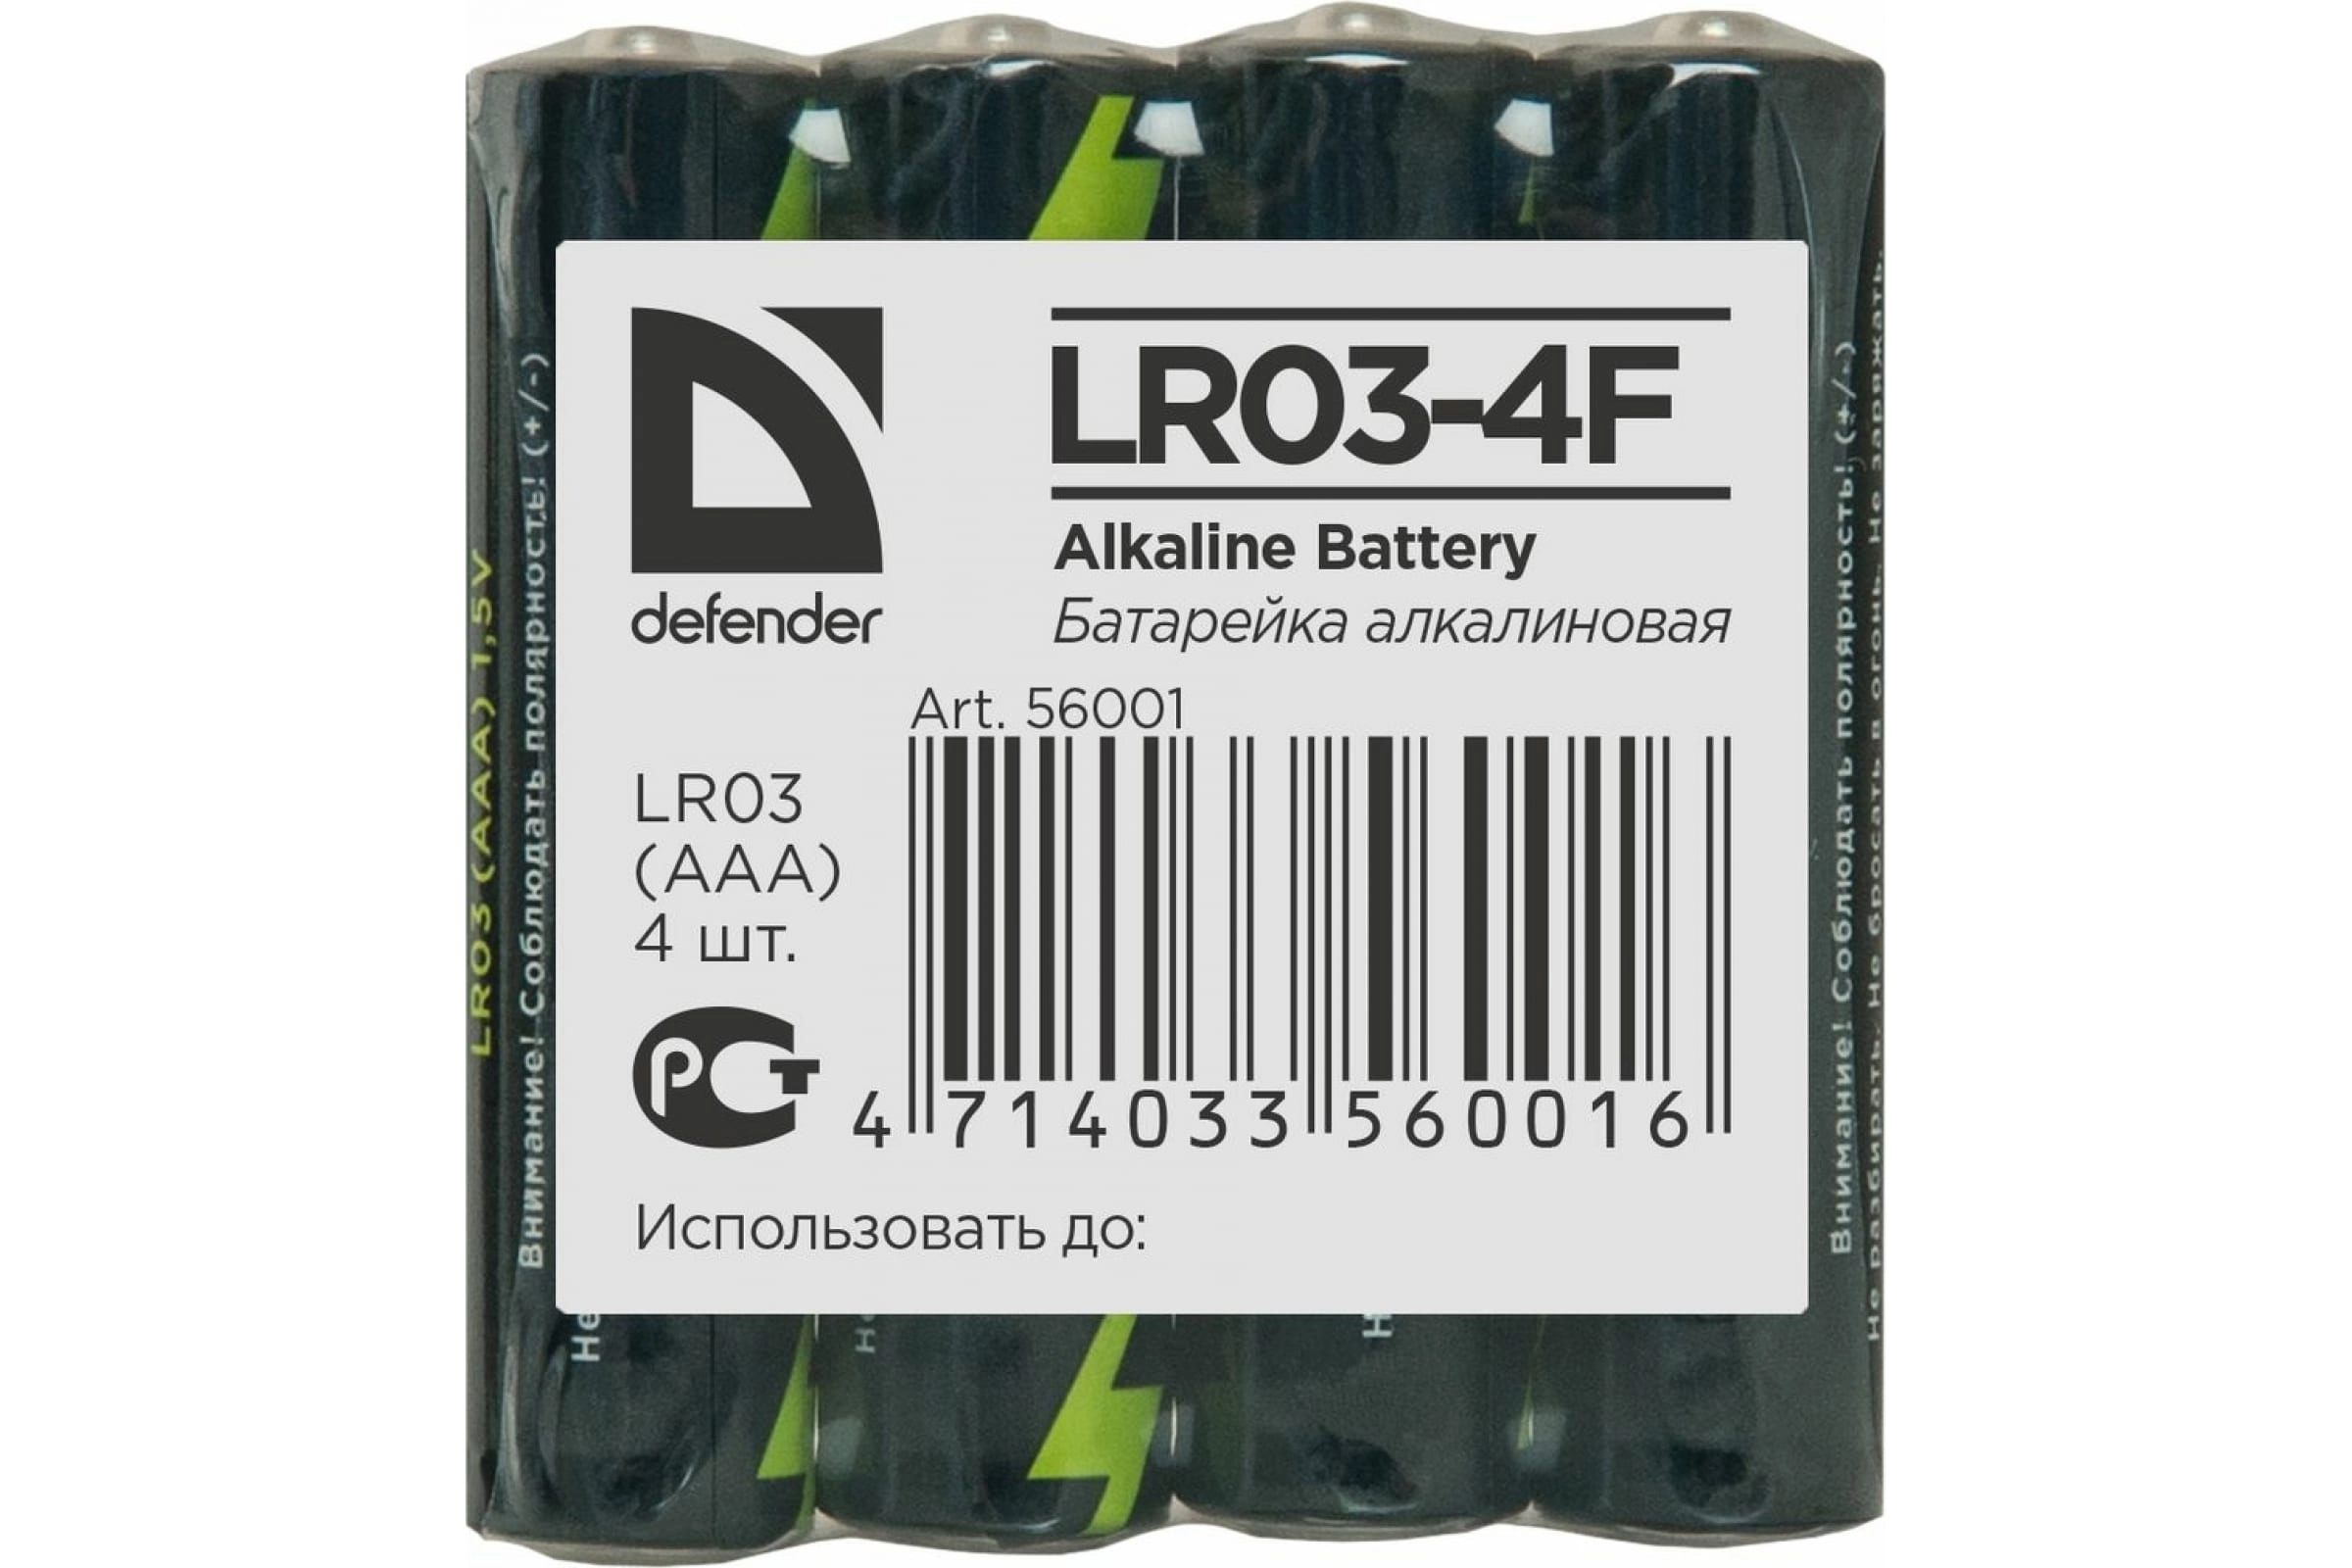 Батарейка алкалиновая DEFENDER LR03-4F AAA, в пленке 4 шт (56001)